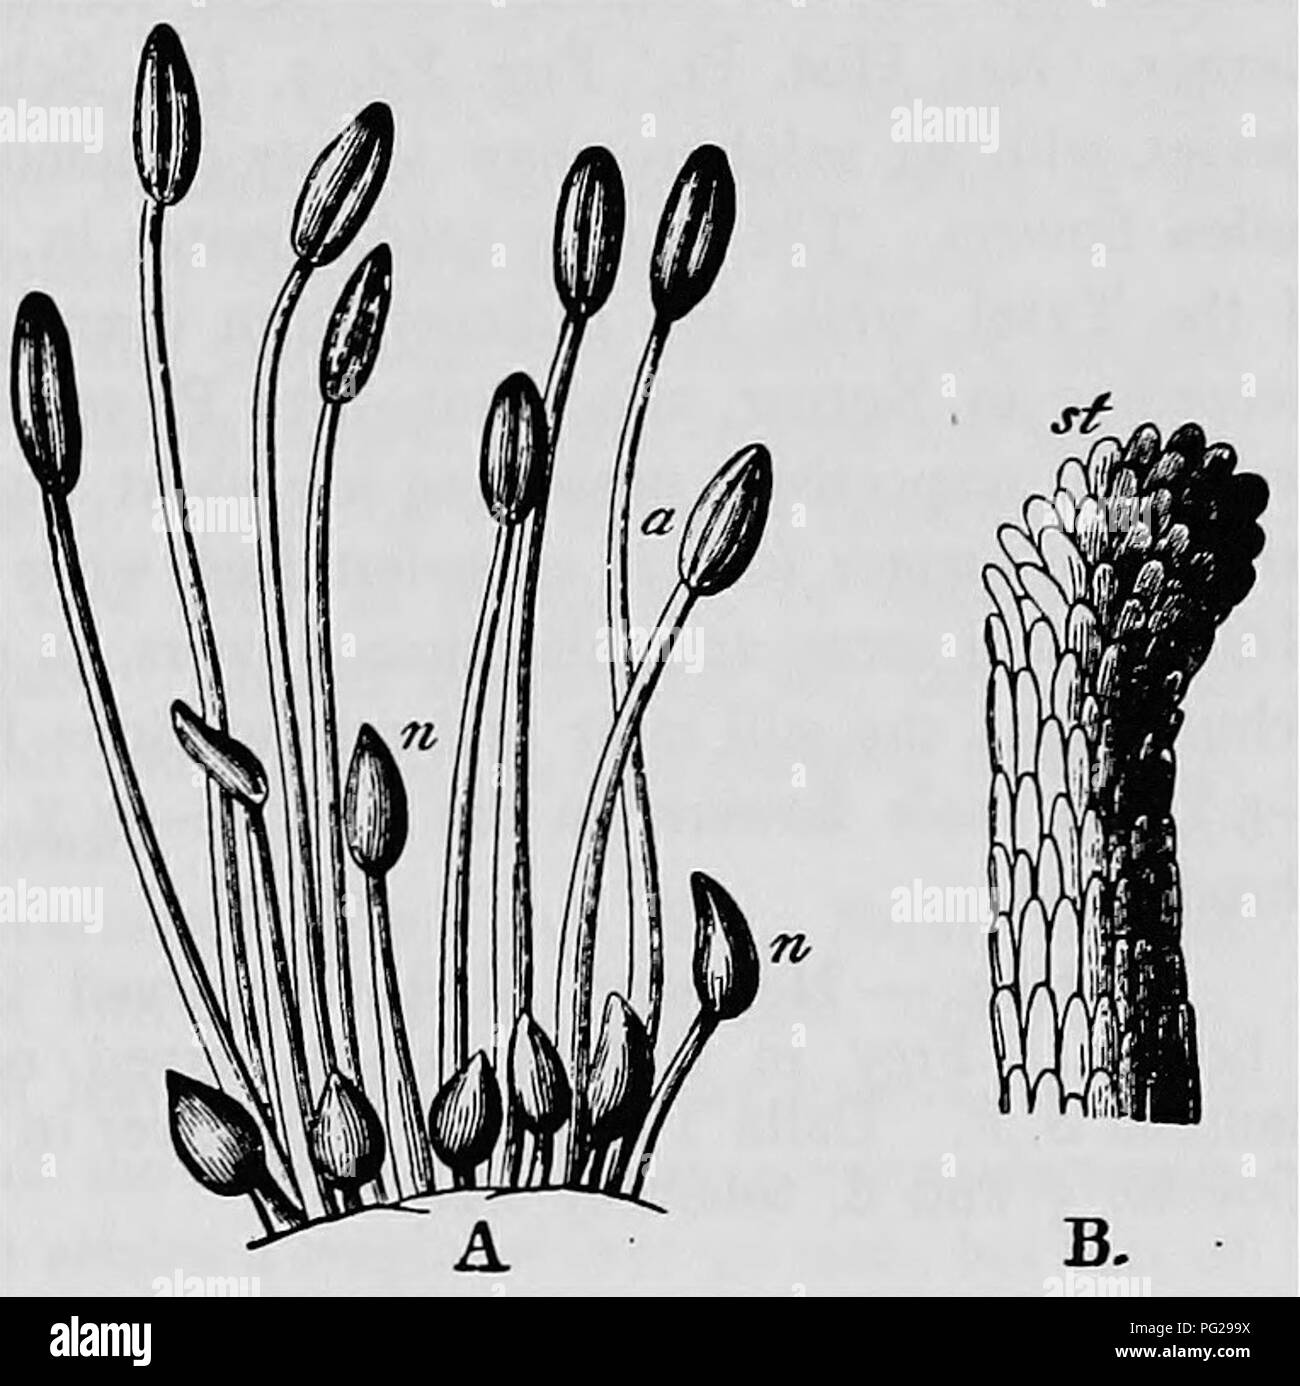 . Handbook of flower pollination : based upon Hermann Mu?ller's work 'The fertilisation of flowers by insects' . Fertilization of plants. RANUNCULACEAE Kiel, freq.; H. M., Thuringia); 4. B. hortorum L. 5 (Kn.), as the last. H. M. also observed in Thuringia : 5. Andrena gwynana K. S skg.; 6. Halictus cylindricus, F. 5, po-cltg., freq.; 7. H. morio i^. 5, po-cltg. {b) Formicidae {zA ntc.ZT-Xitti); 8. Lasius aiienus Foerst. §; 9. Leptothorax interruptus Schenck 5; 10. Myrmica levinodis Nyl. 5; II. M. ruginodis Nyl. 5; 12. M. scabrinodis Nyl. J; 13. Tapinoma erraticum Latr. 5. B. Coleoptera. { Stock Photo